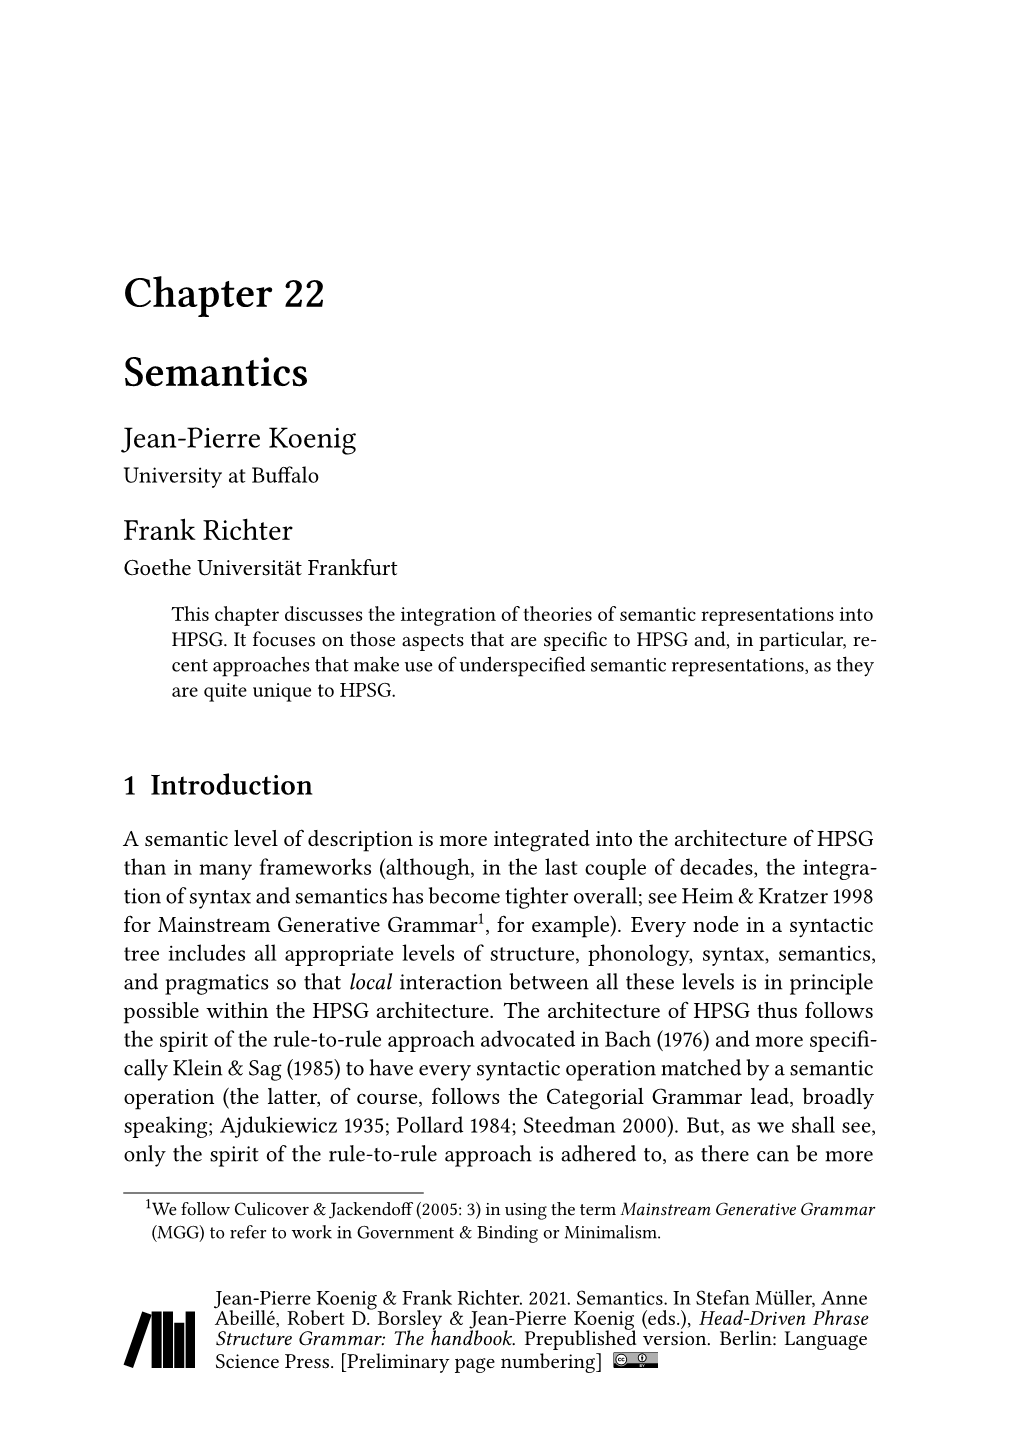 Chapter 22 Semantics Jean-Pierre Koenig University at Buffalo Frank Richter Goethe Universität Frankfurt